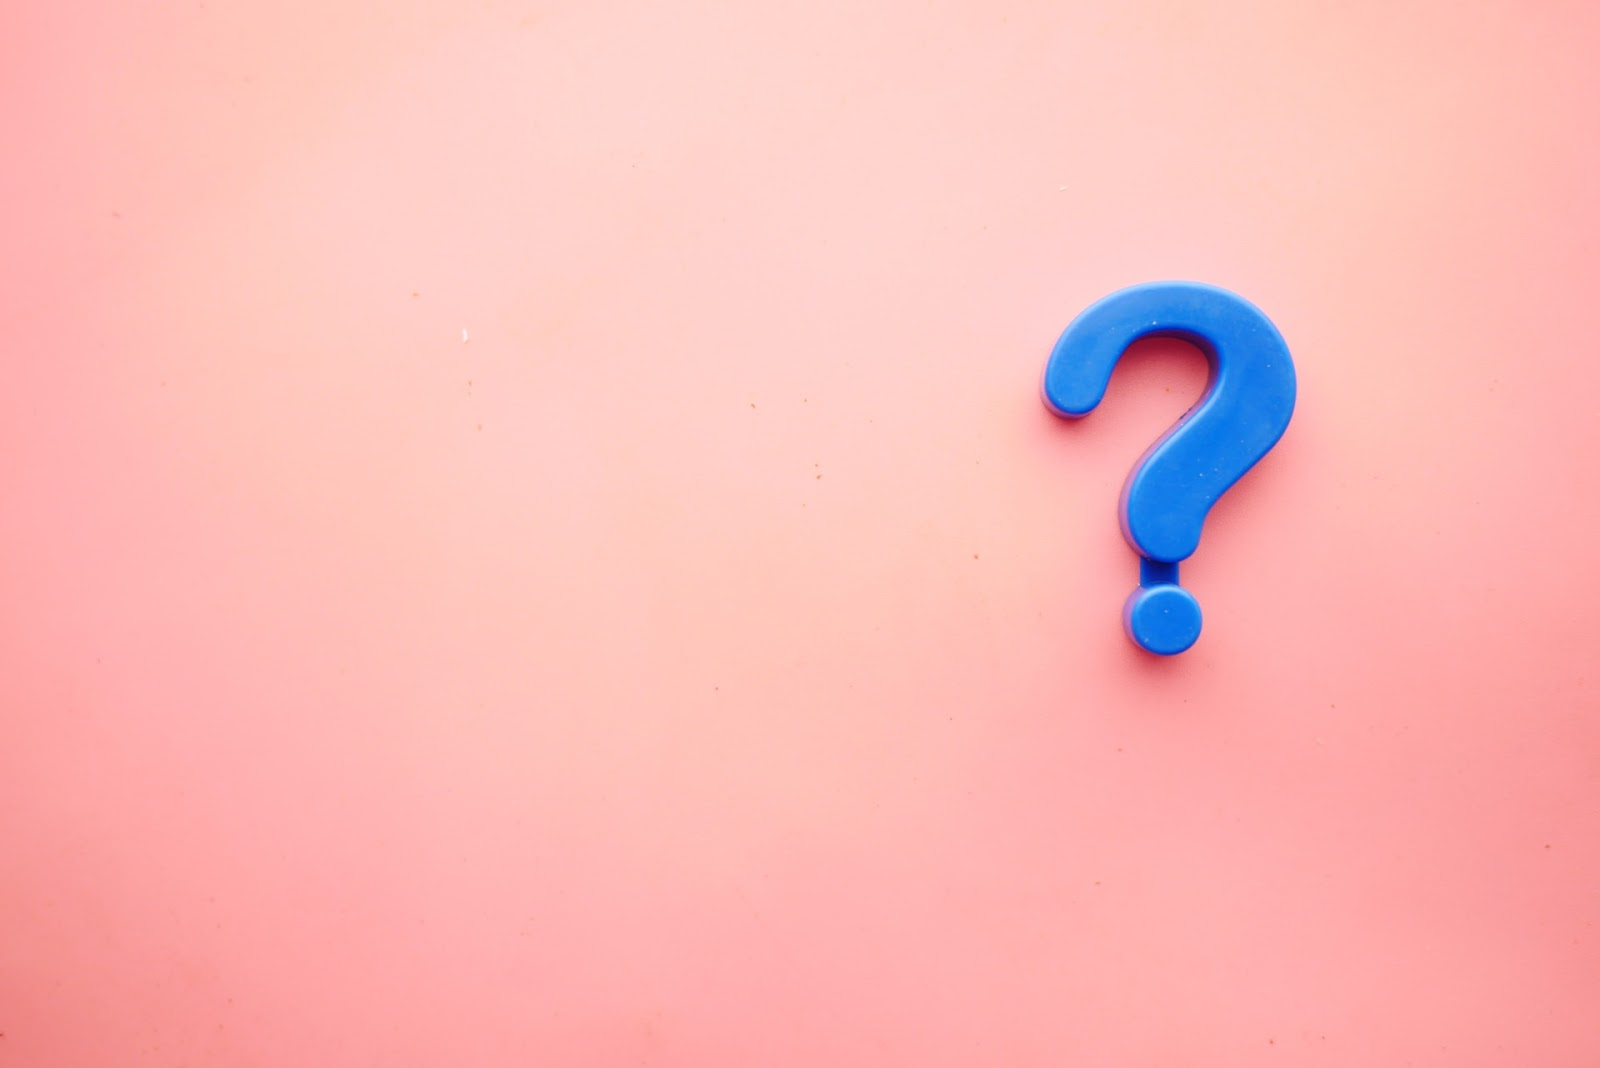 a blue question mark against a peach coloured background